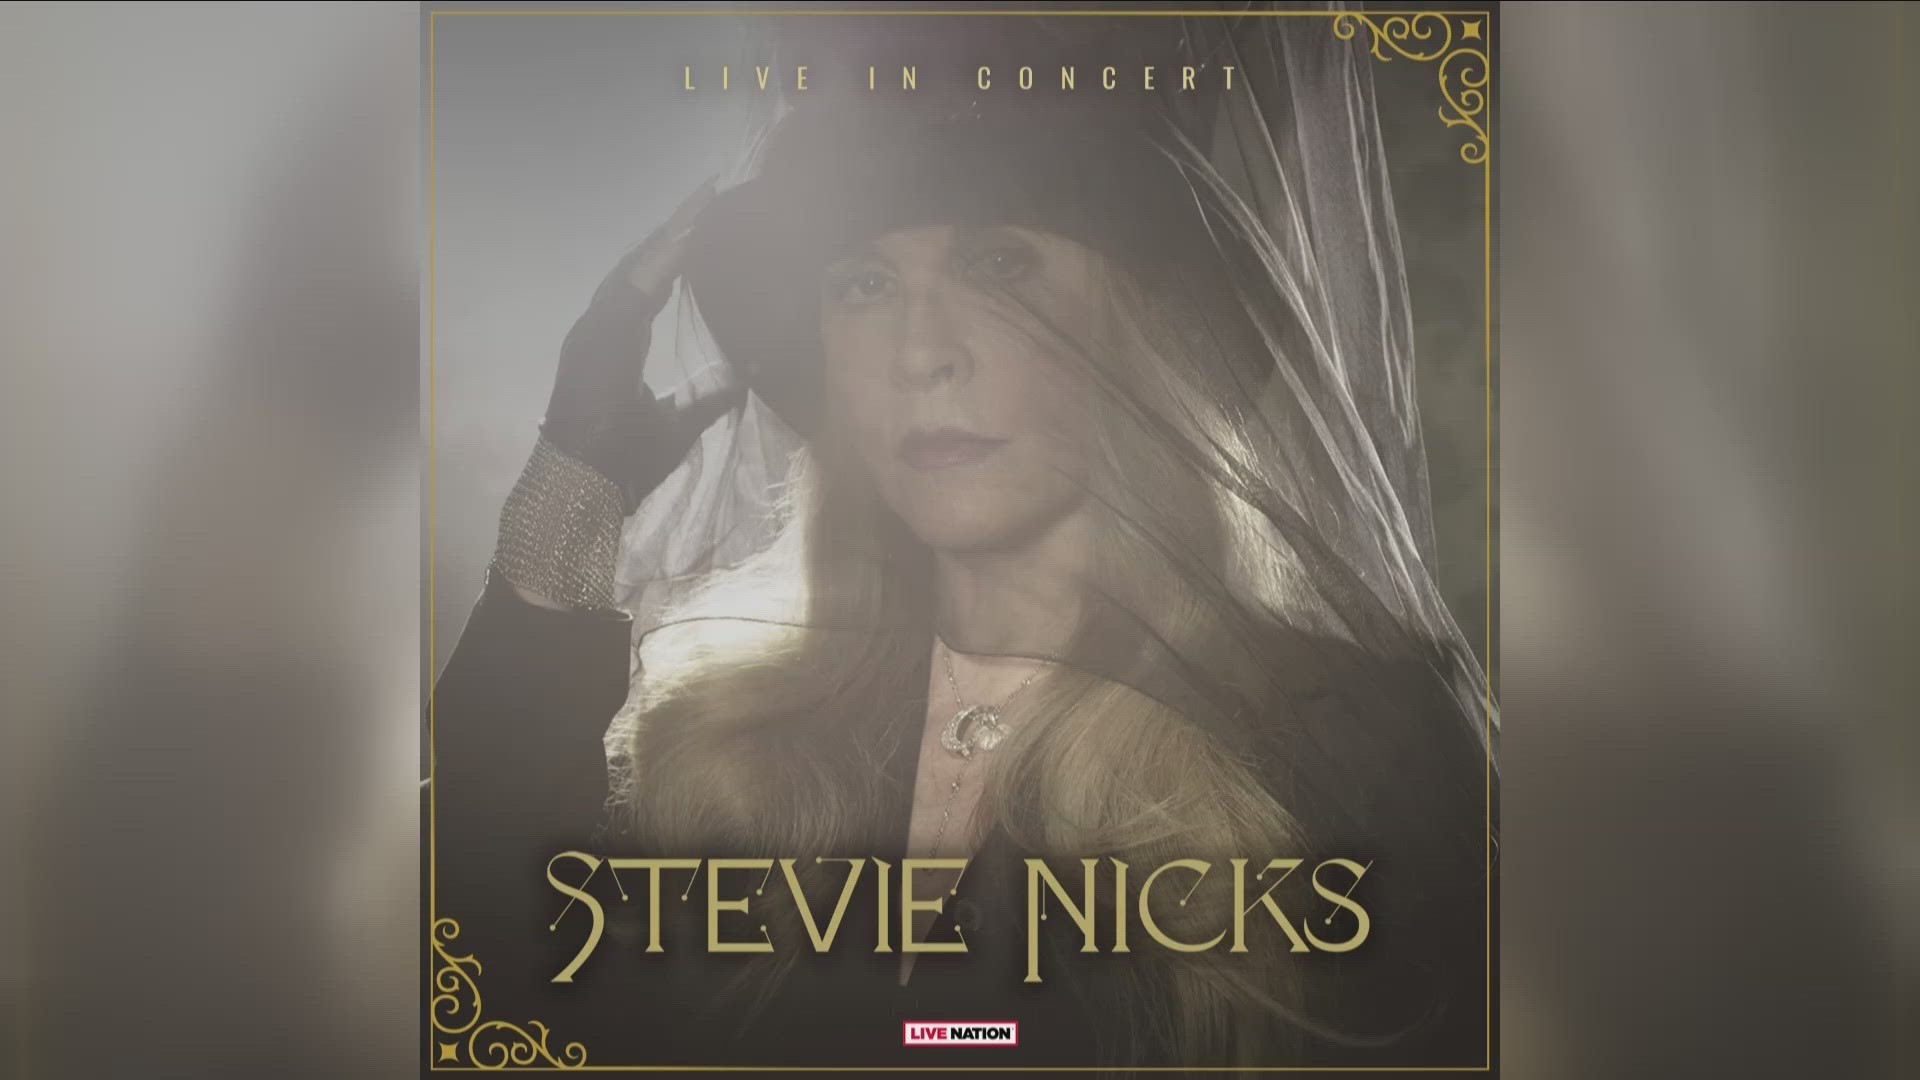 Stevie Nicks concert October 4th at KeyBank Center